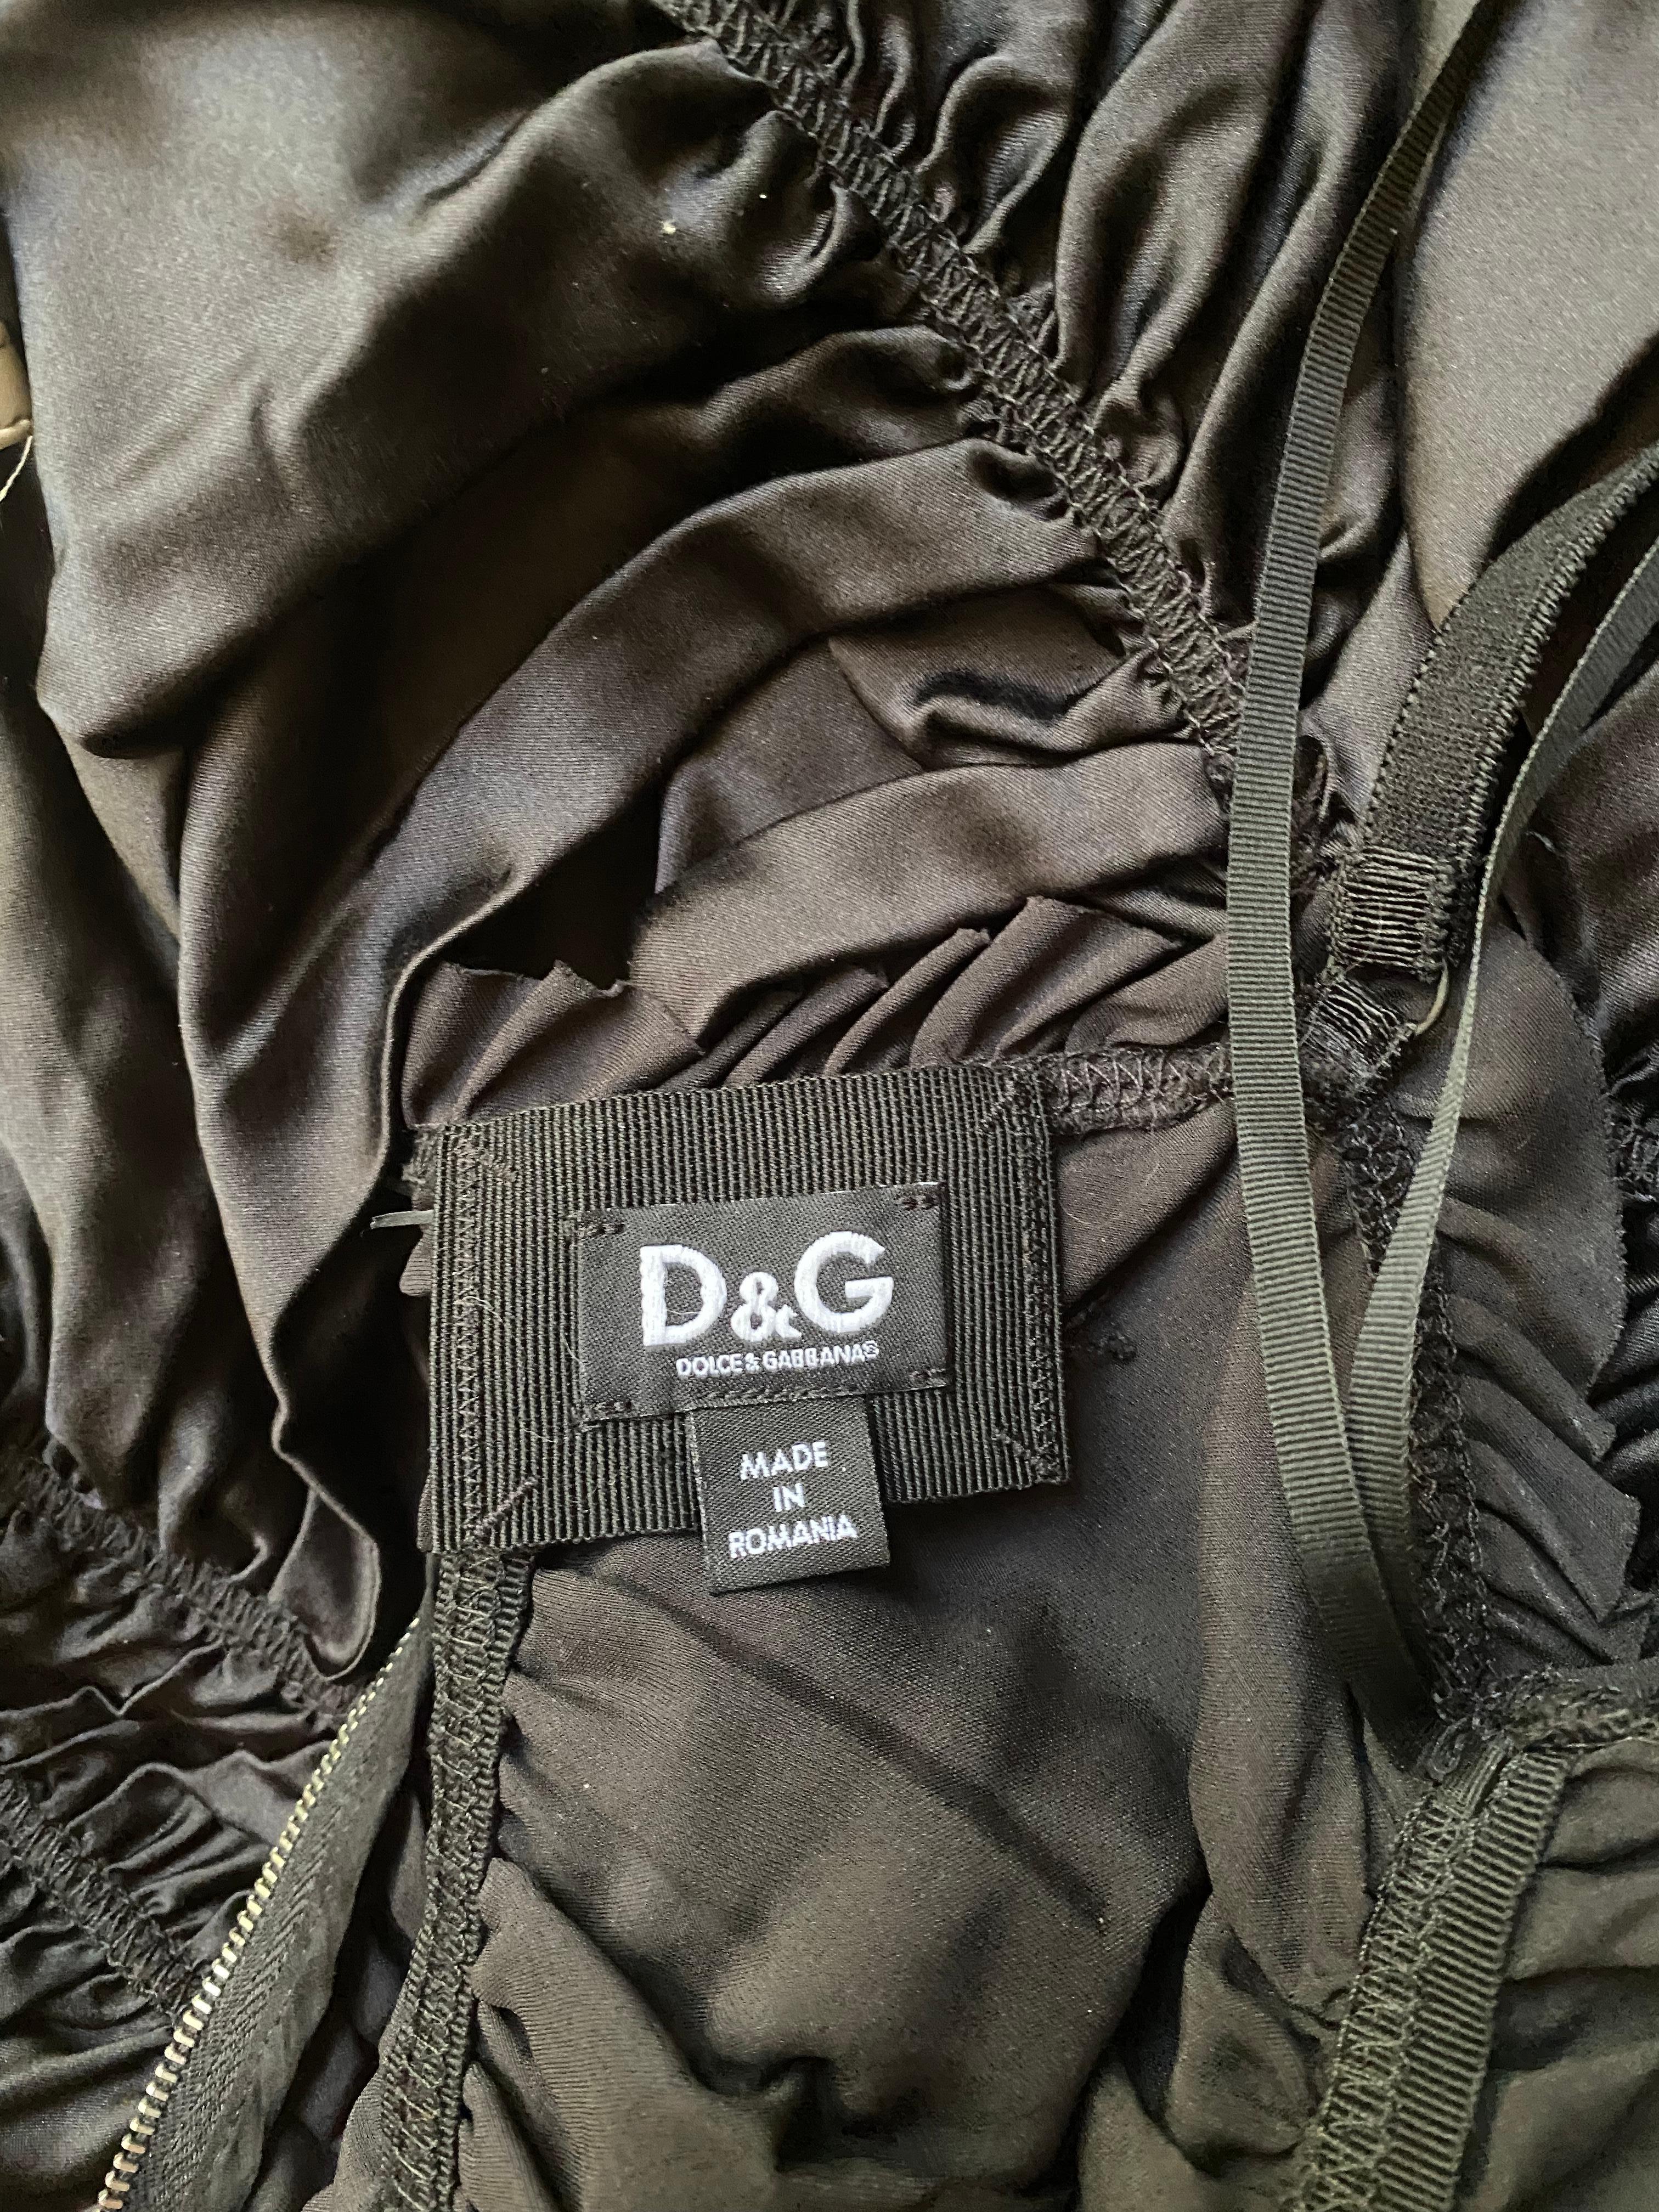 D & G Dolce Gabbana Black Ruched Silk “Lingerie Look